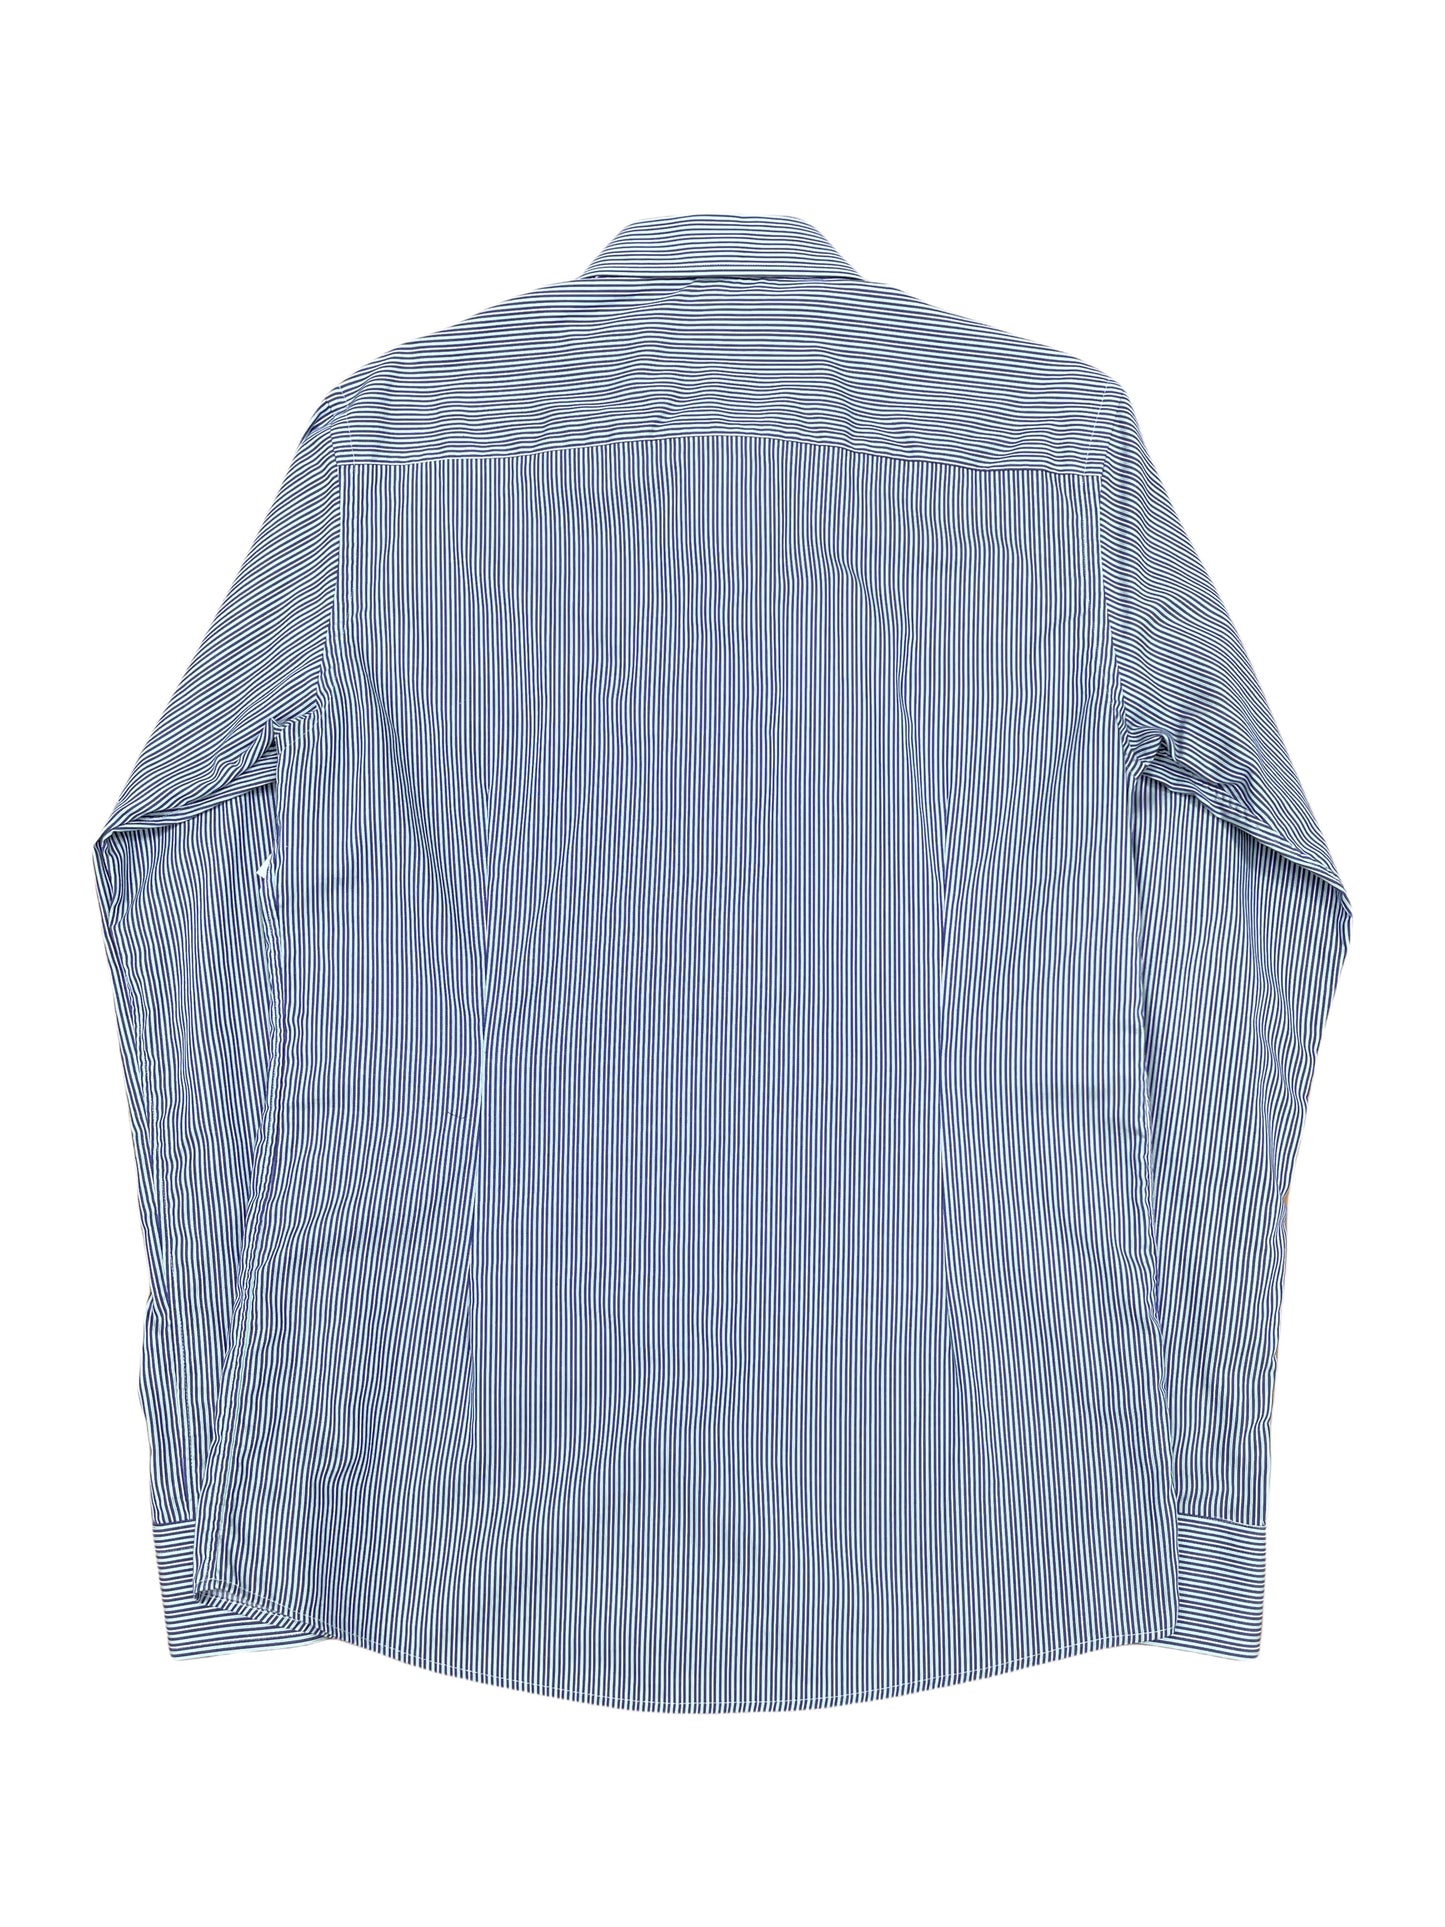 Eton Blue with Green Striped Shirt 16.5 - Large